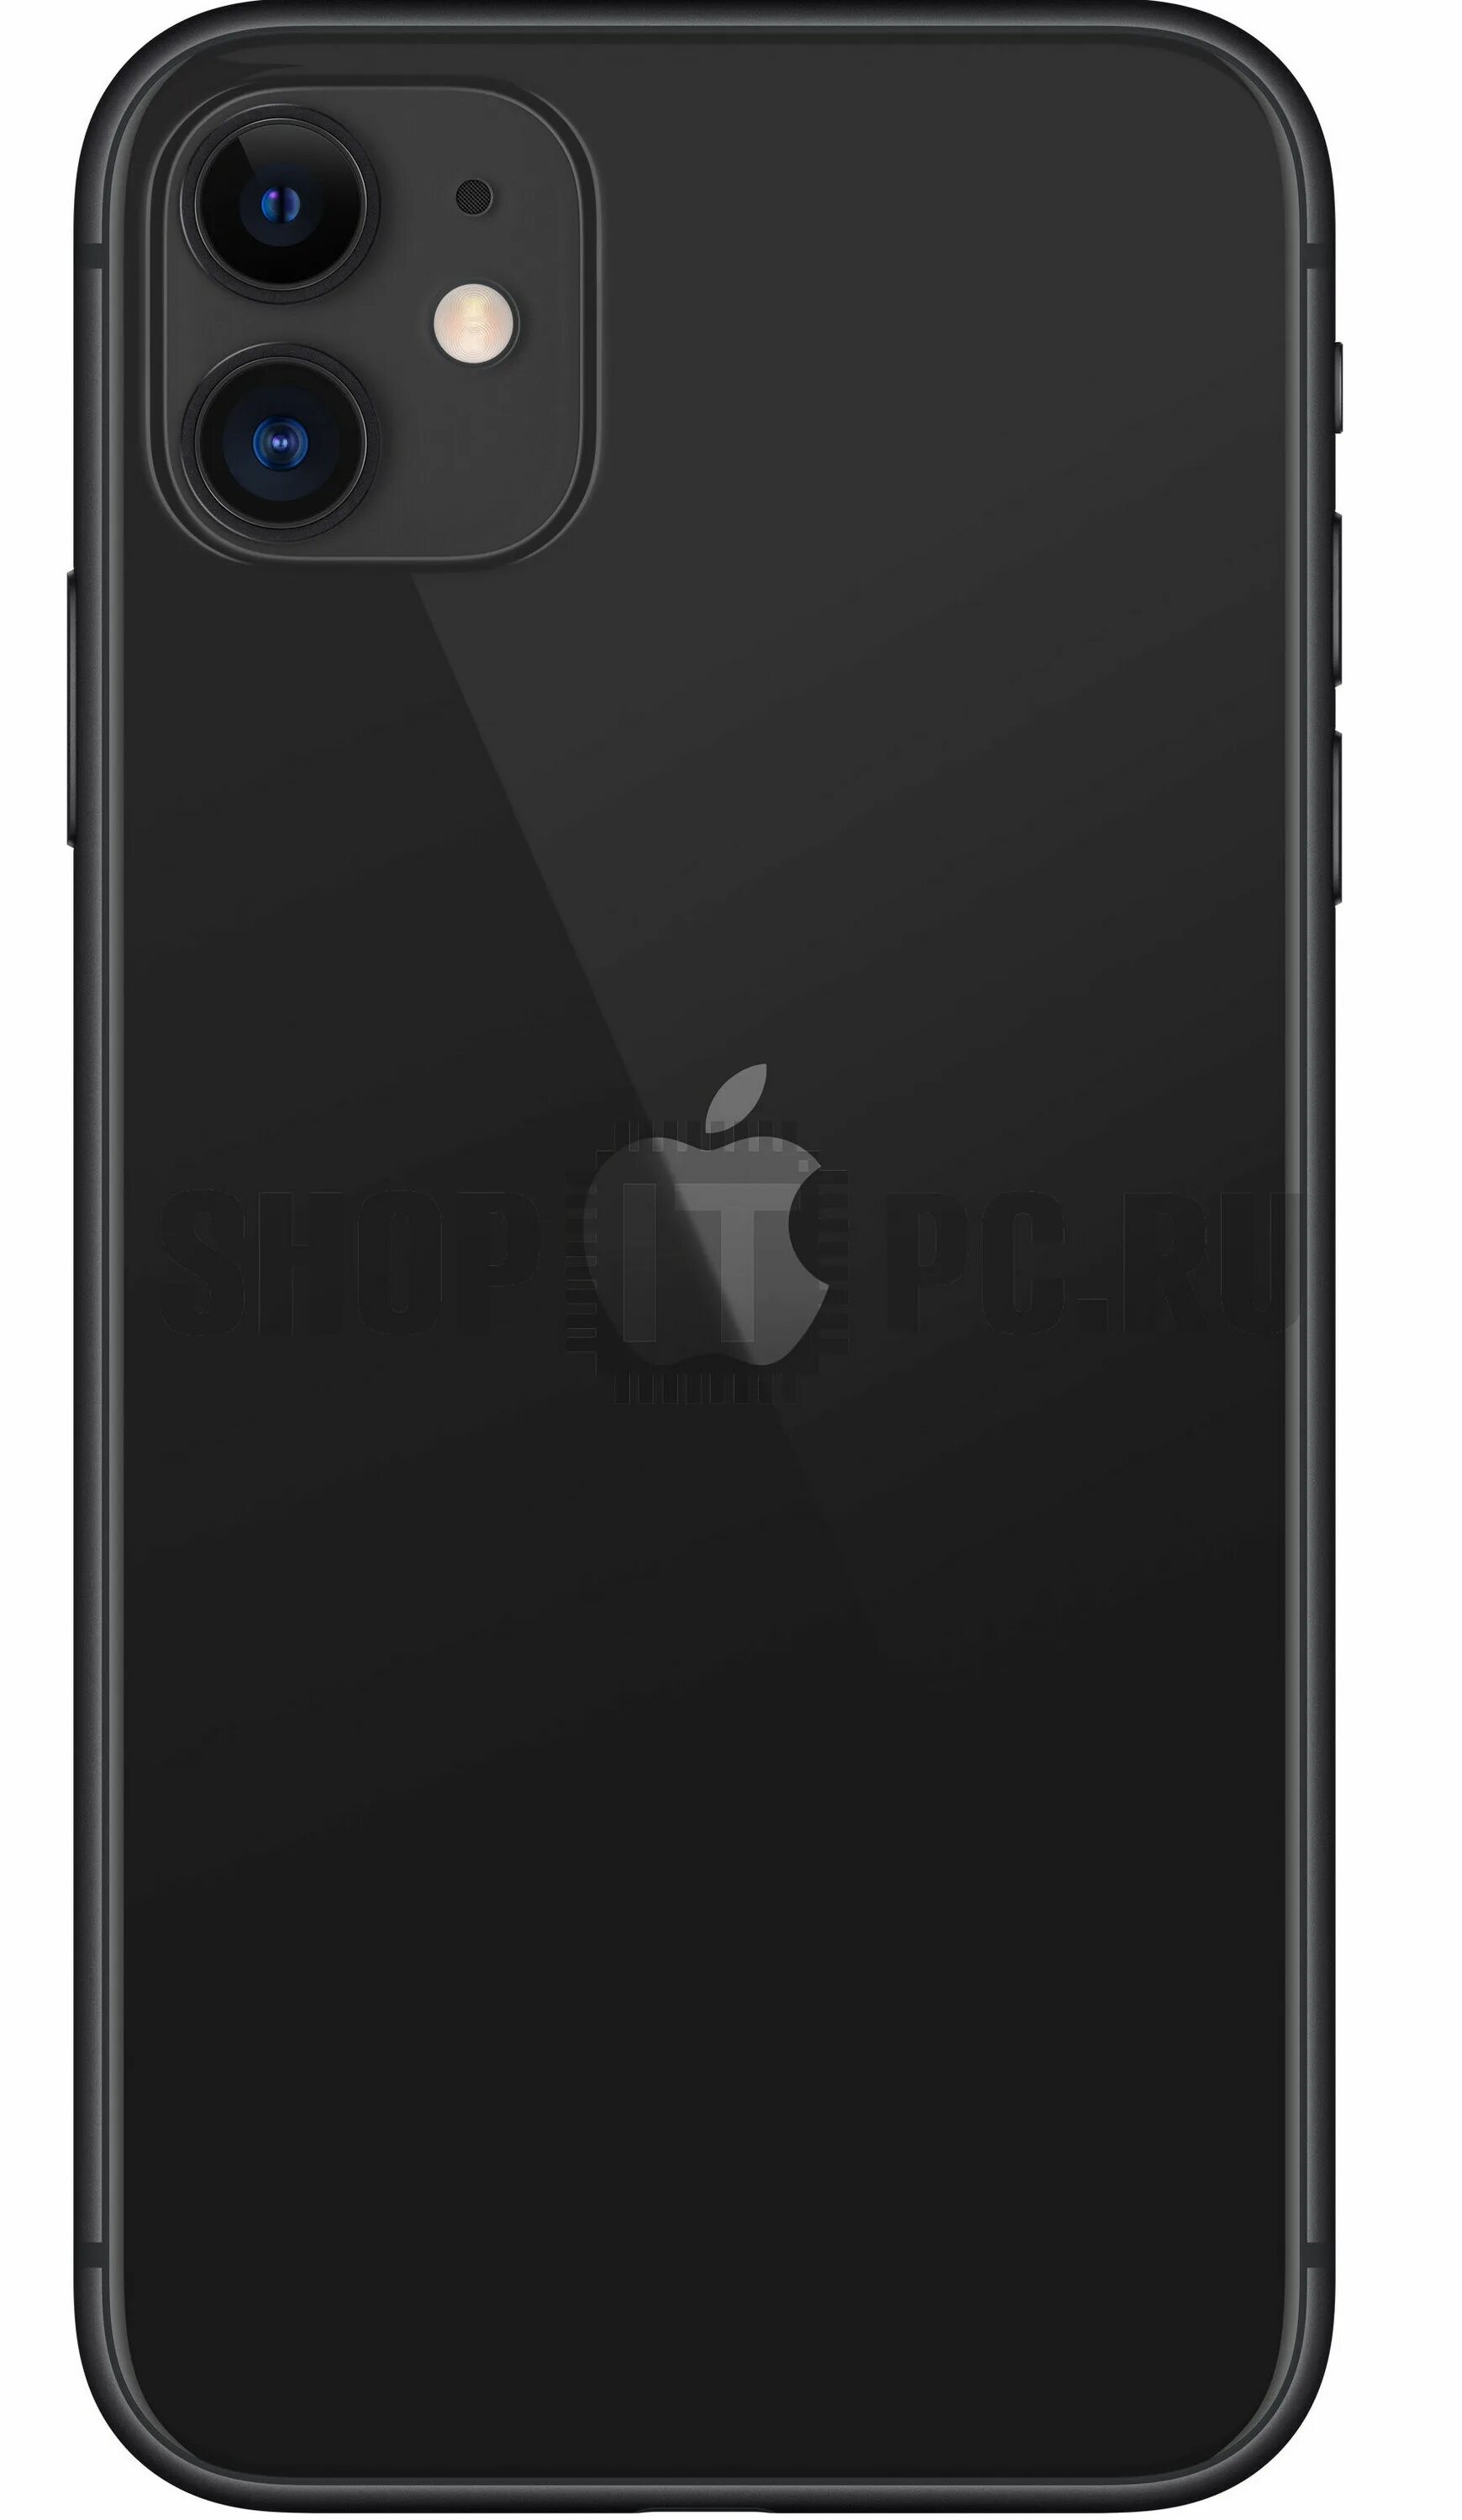 Айфон 11 2020. Apple iphone 11 128gb. Iphone 11 64gb Black. Apple iphone 11 128gb Black. Apple iphone se 2020 64gb Black.